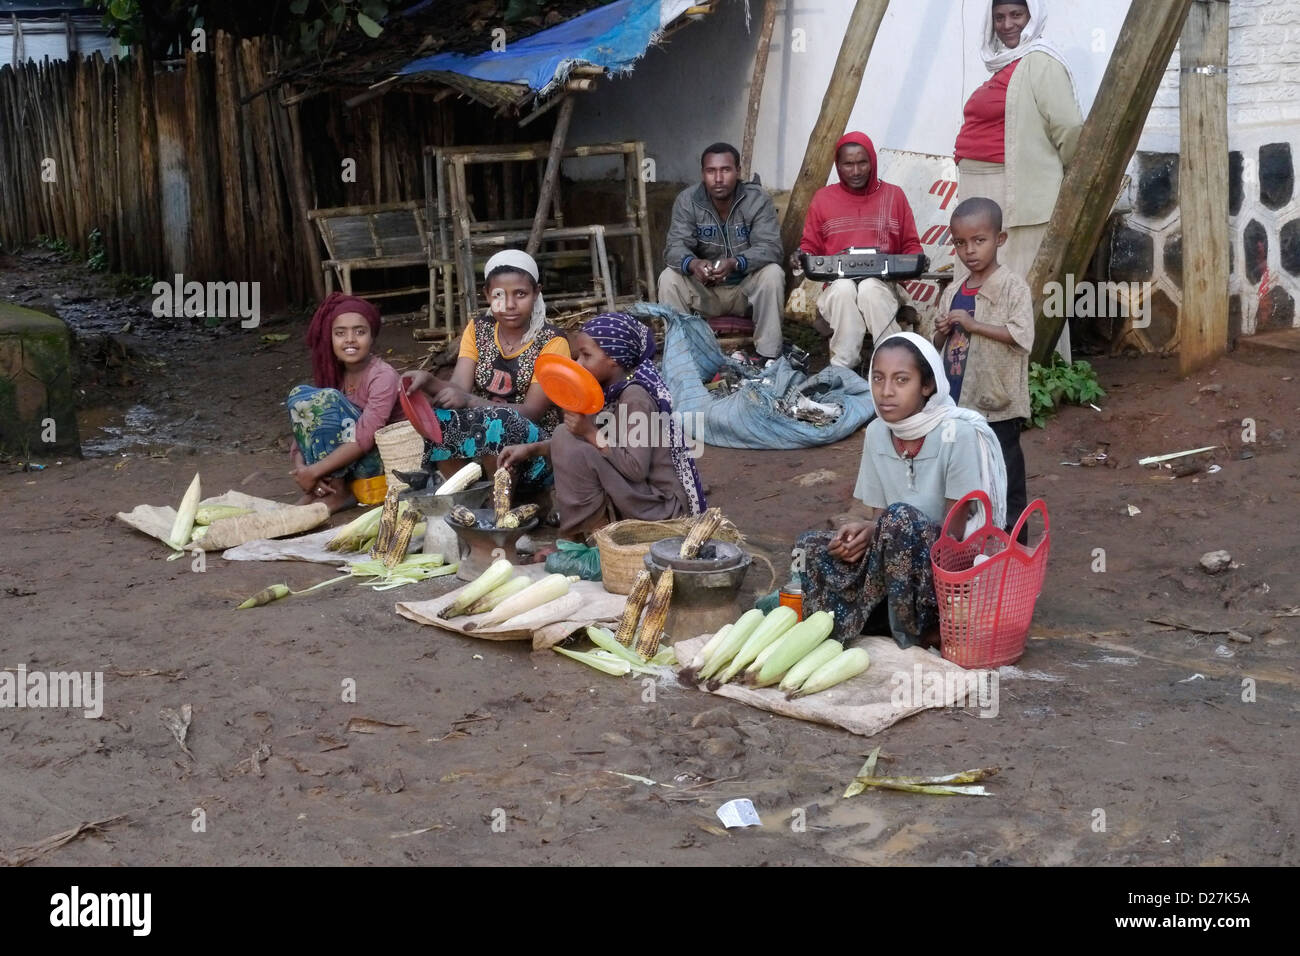 ETHIOPIA Street scenes on a rainy day in Chagni. Women selling corn. Stock Photo